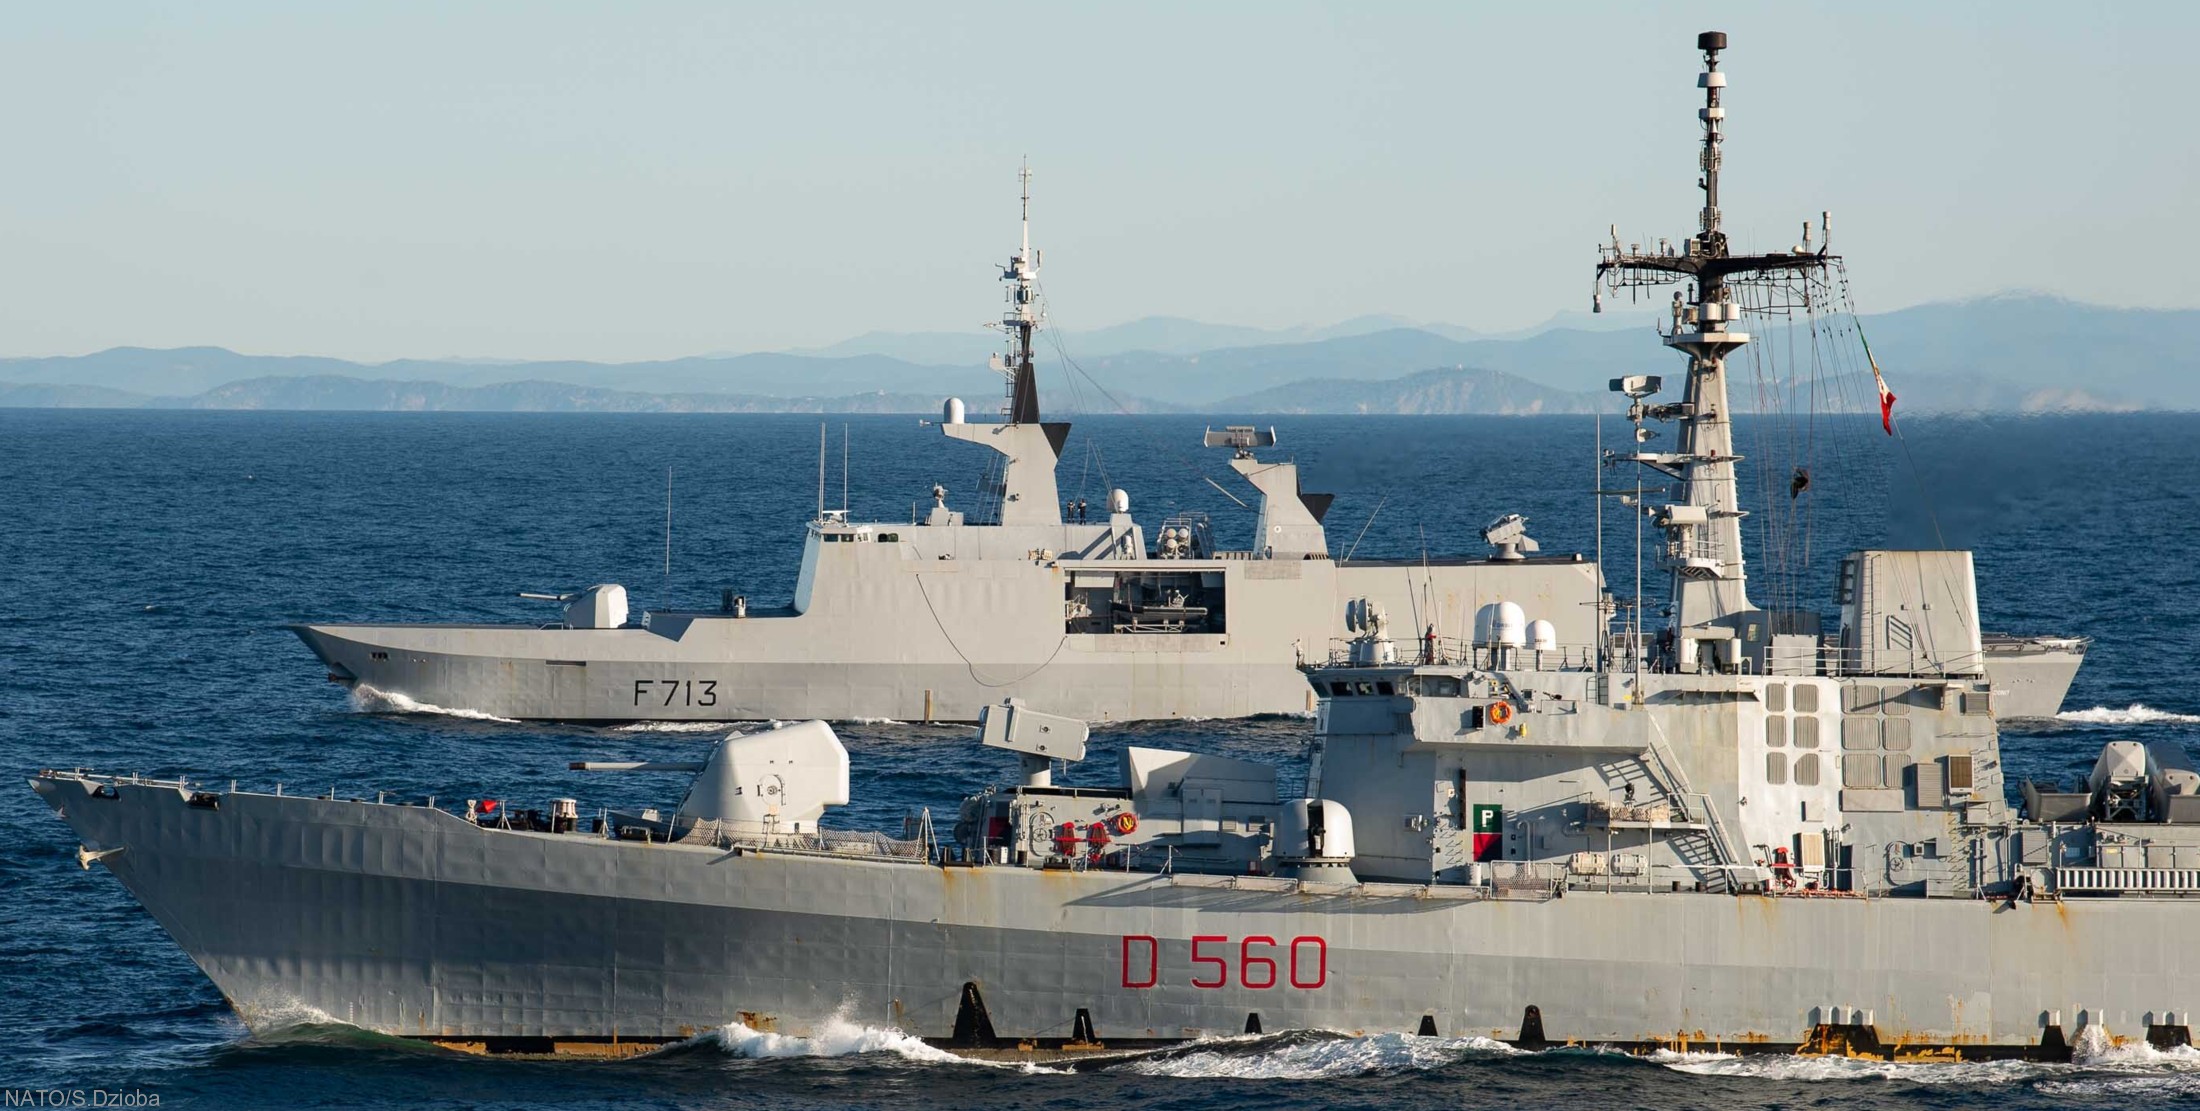 d-560 luigi durand de la penne its nave guided missile destroyer ddg italian navy marina militare 28